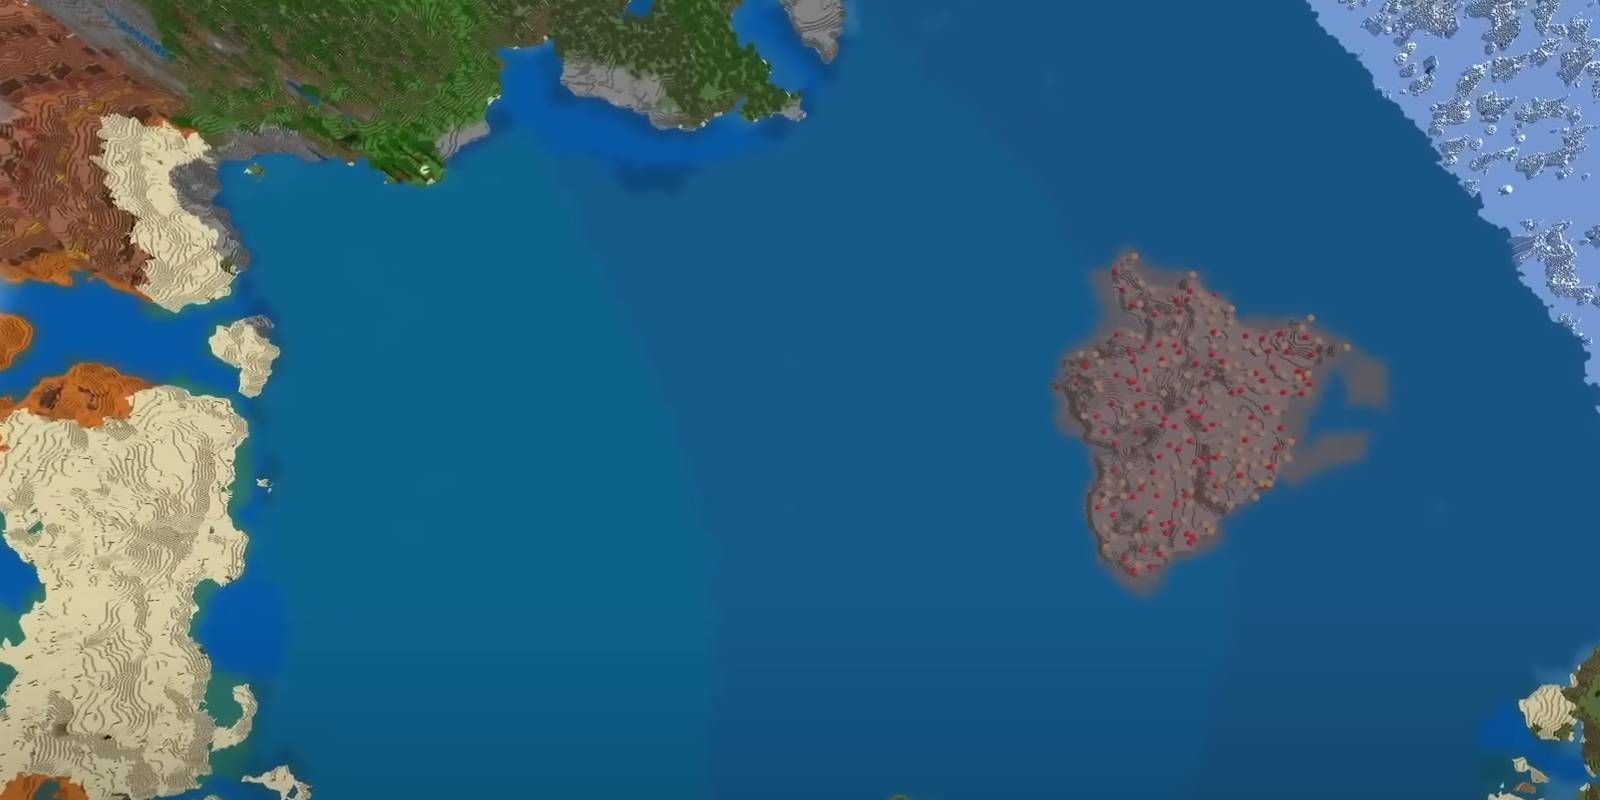 Minecraft Fungal Ocean Island seed world with Mooshroom island in an ocean near several other biomes